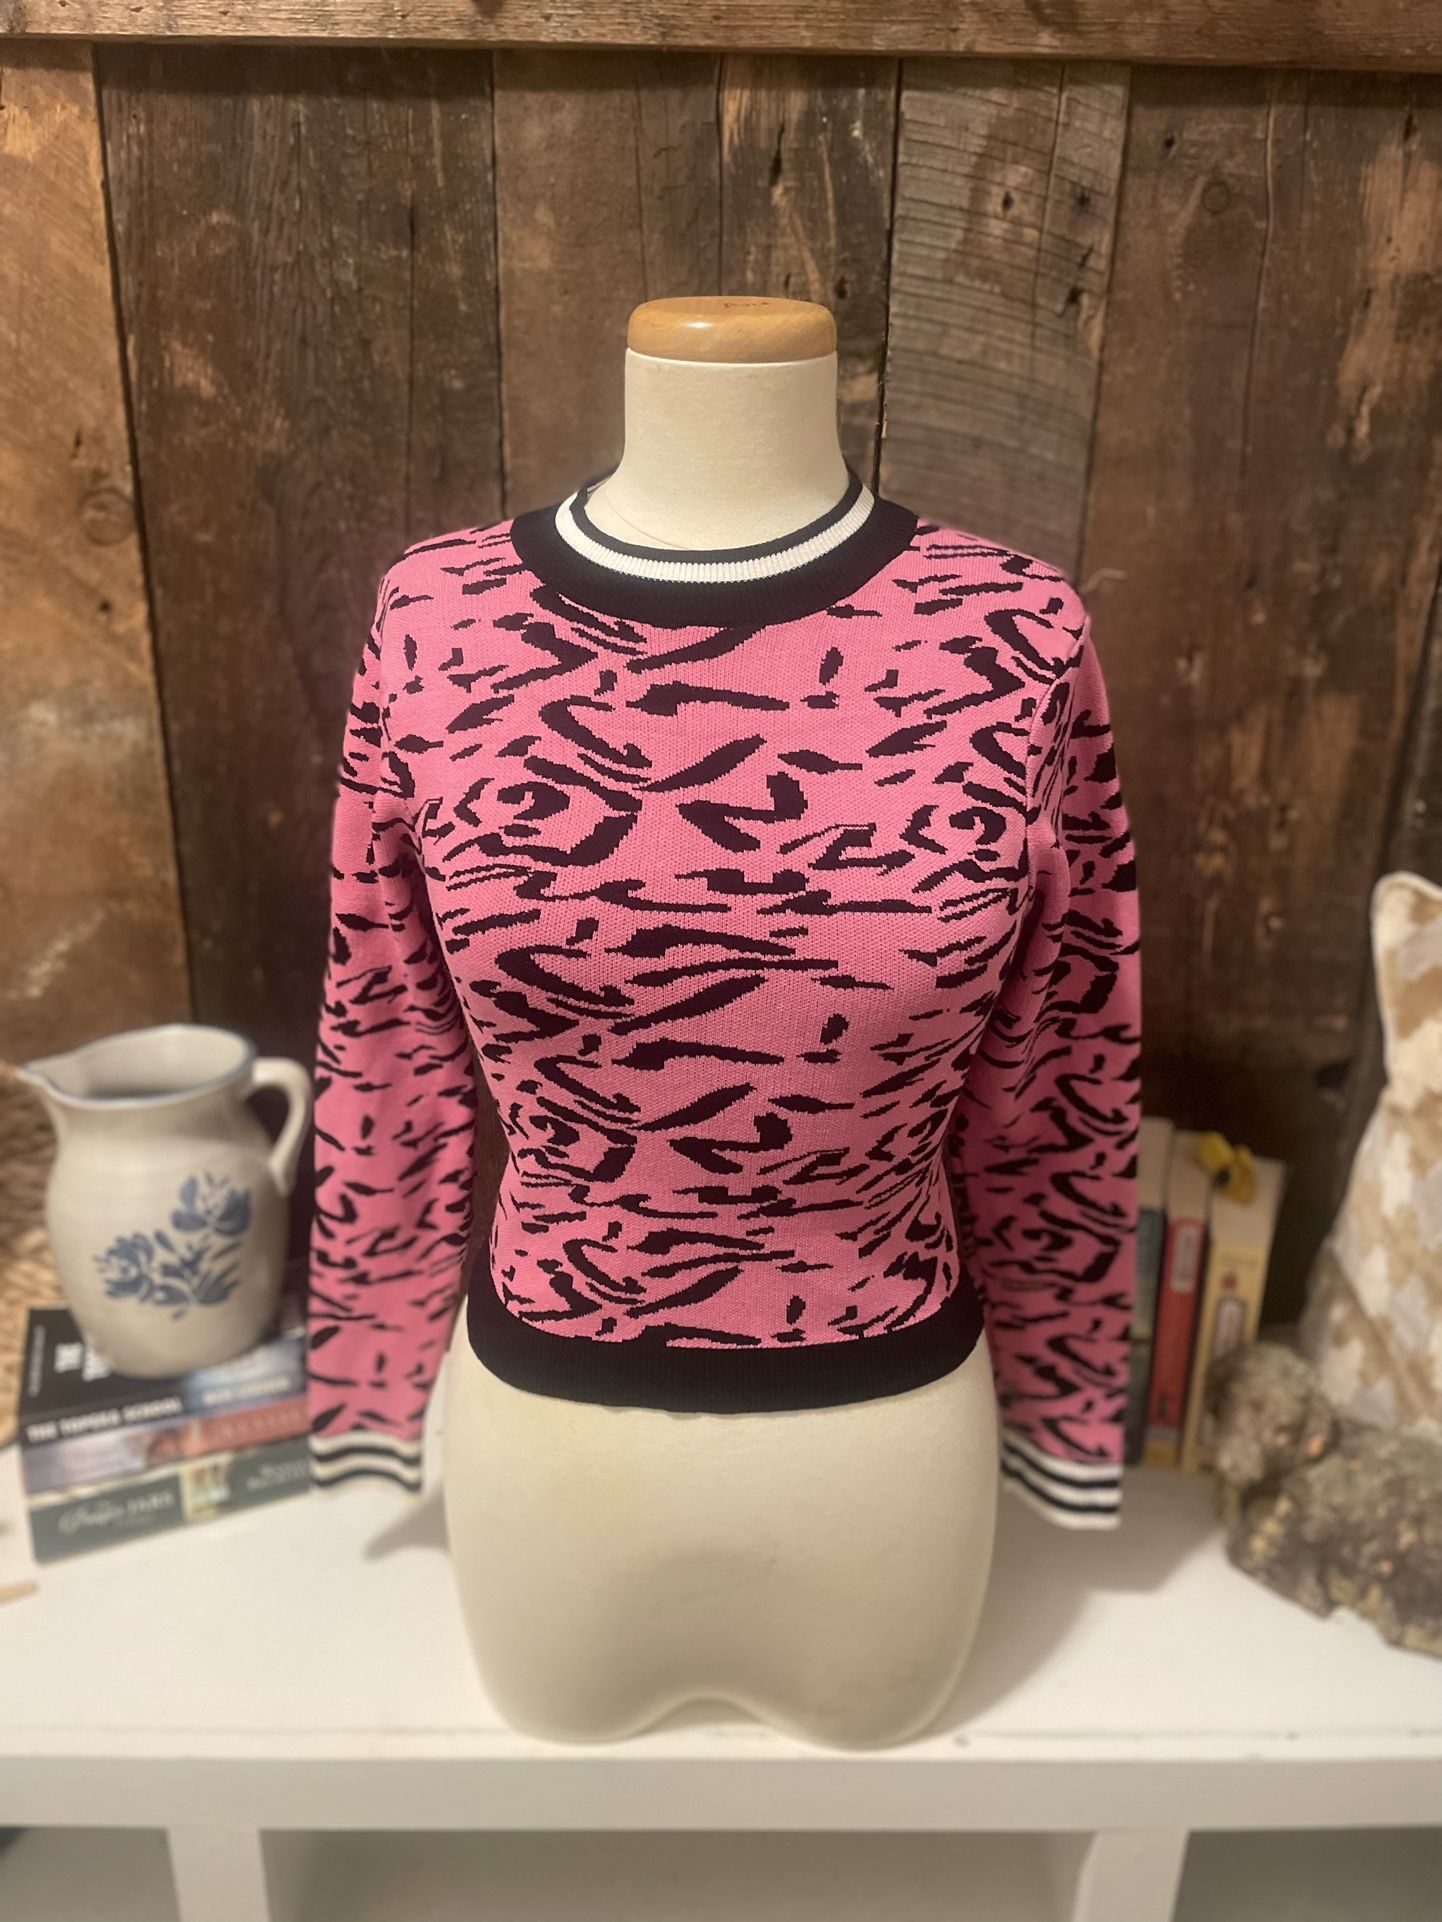 Fashion Nova Pink & Black Cropped Sweater Size XS.